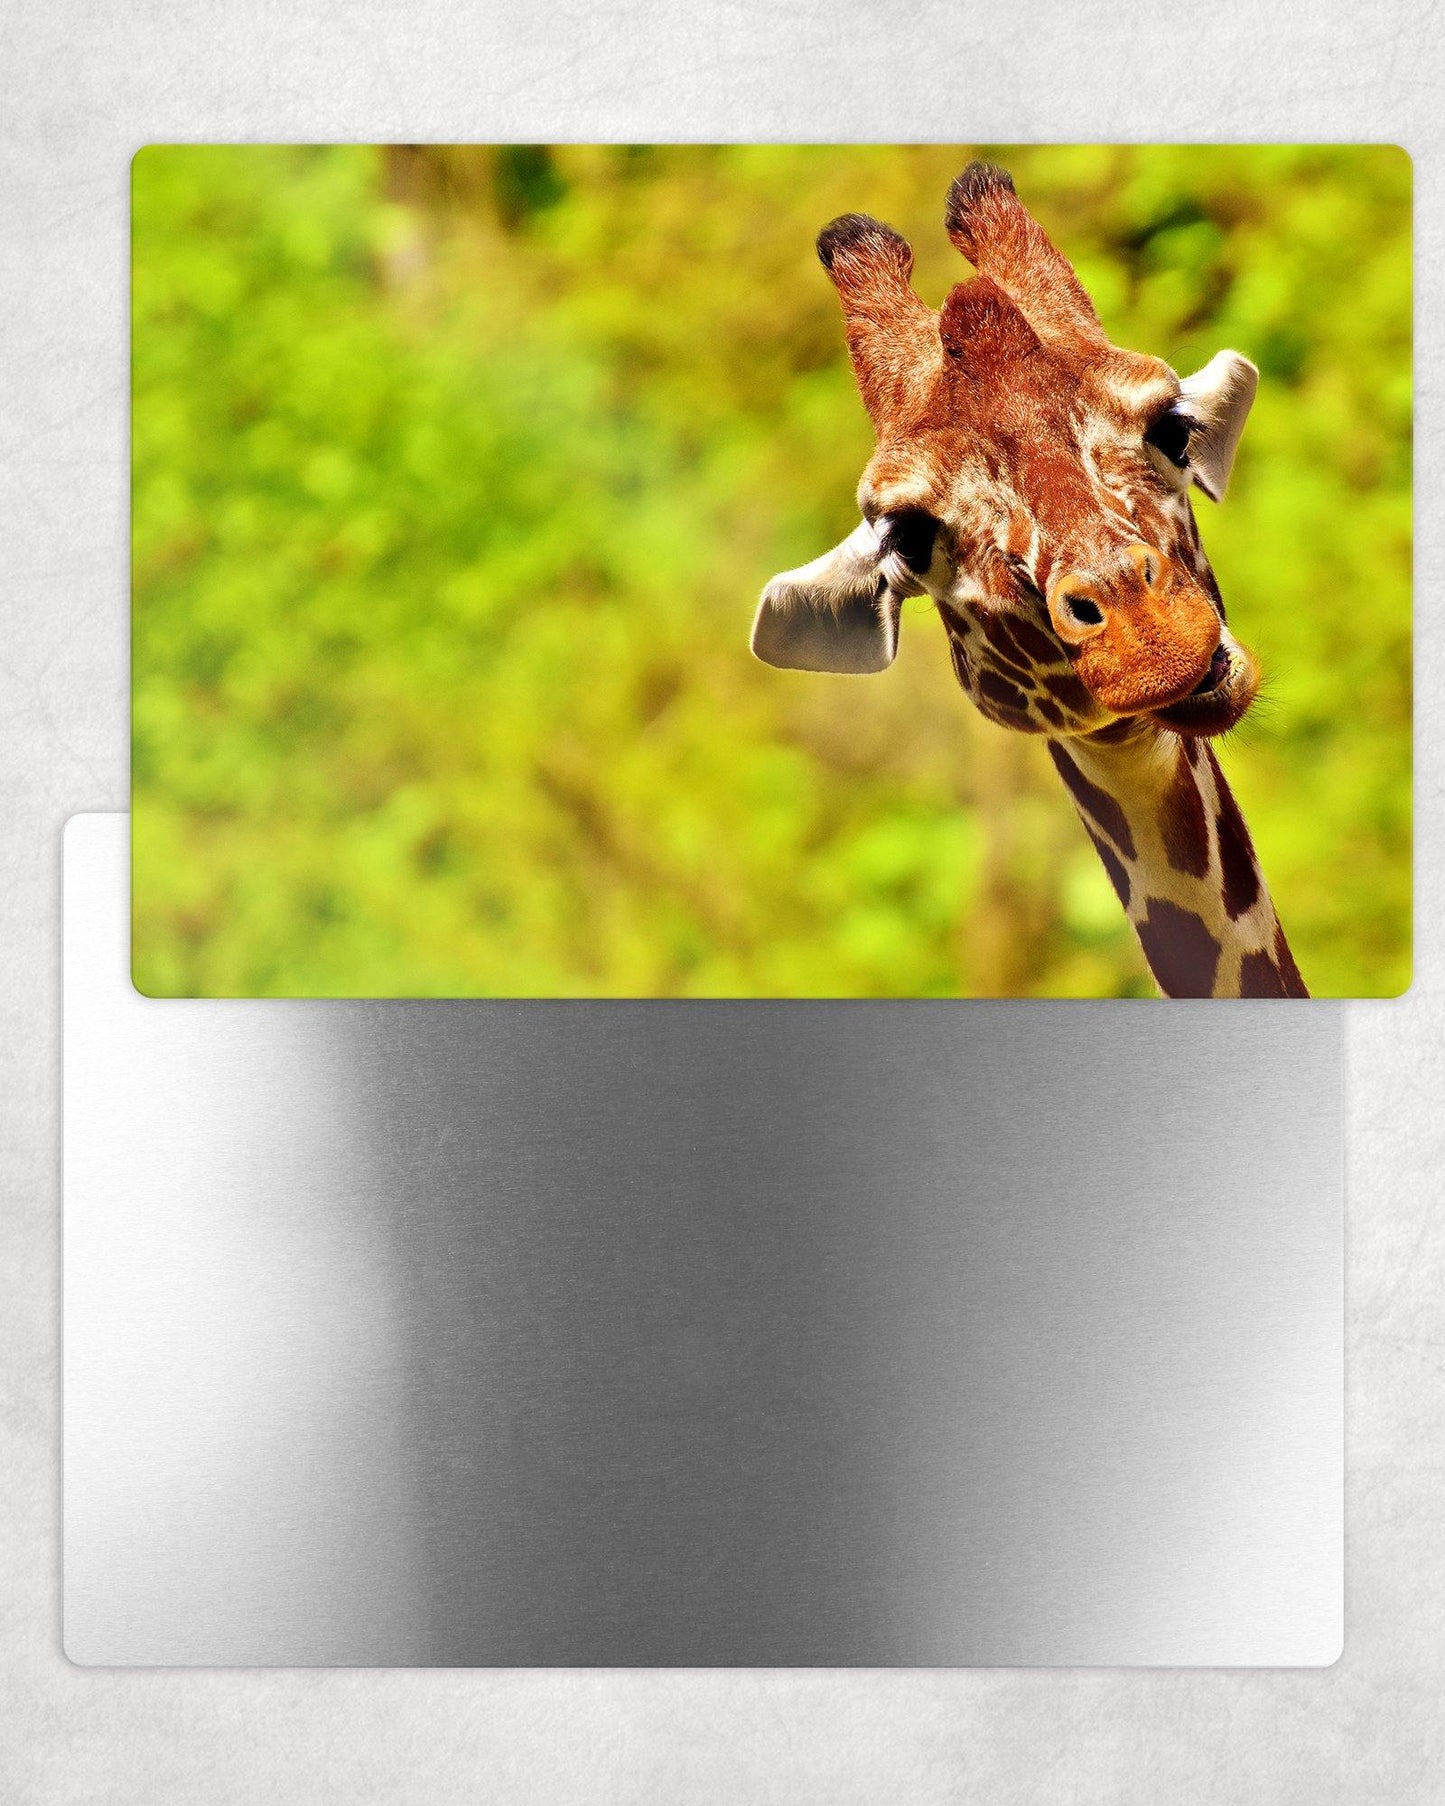 Silly Giraffe Portrait Metal Photo Panel - 8x12 or 12x18 - Schoppix Gifts